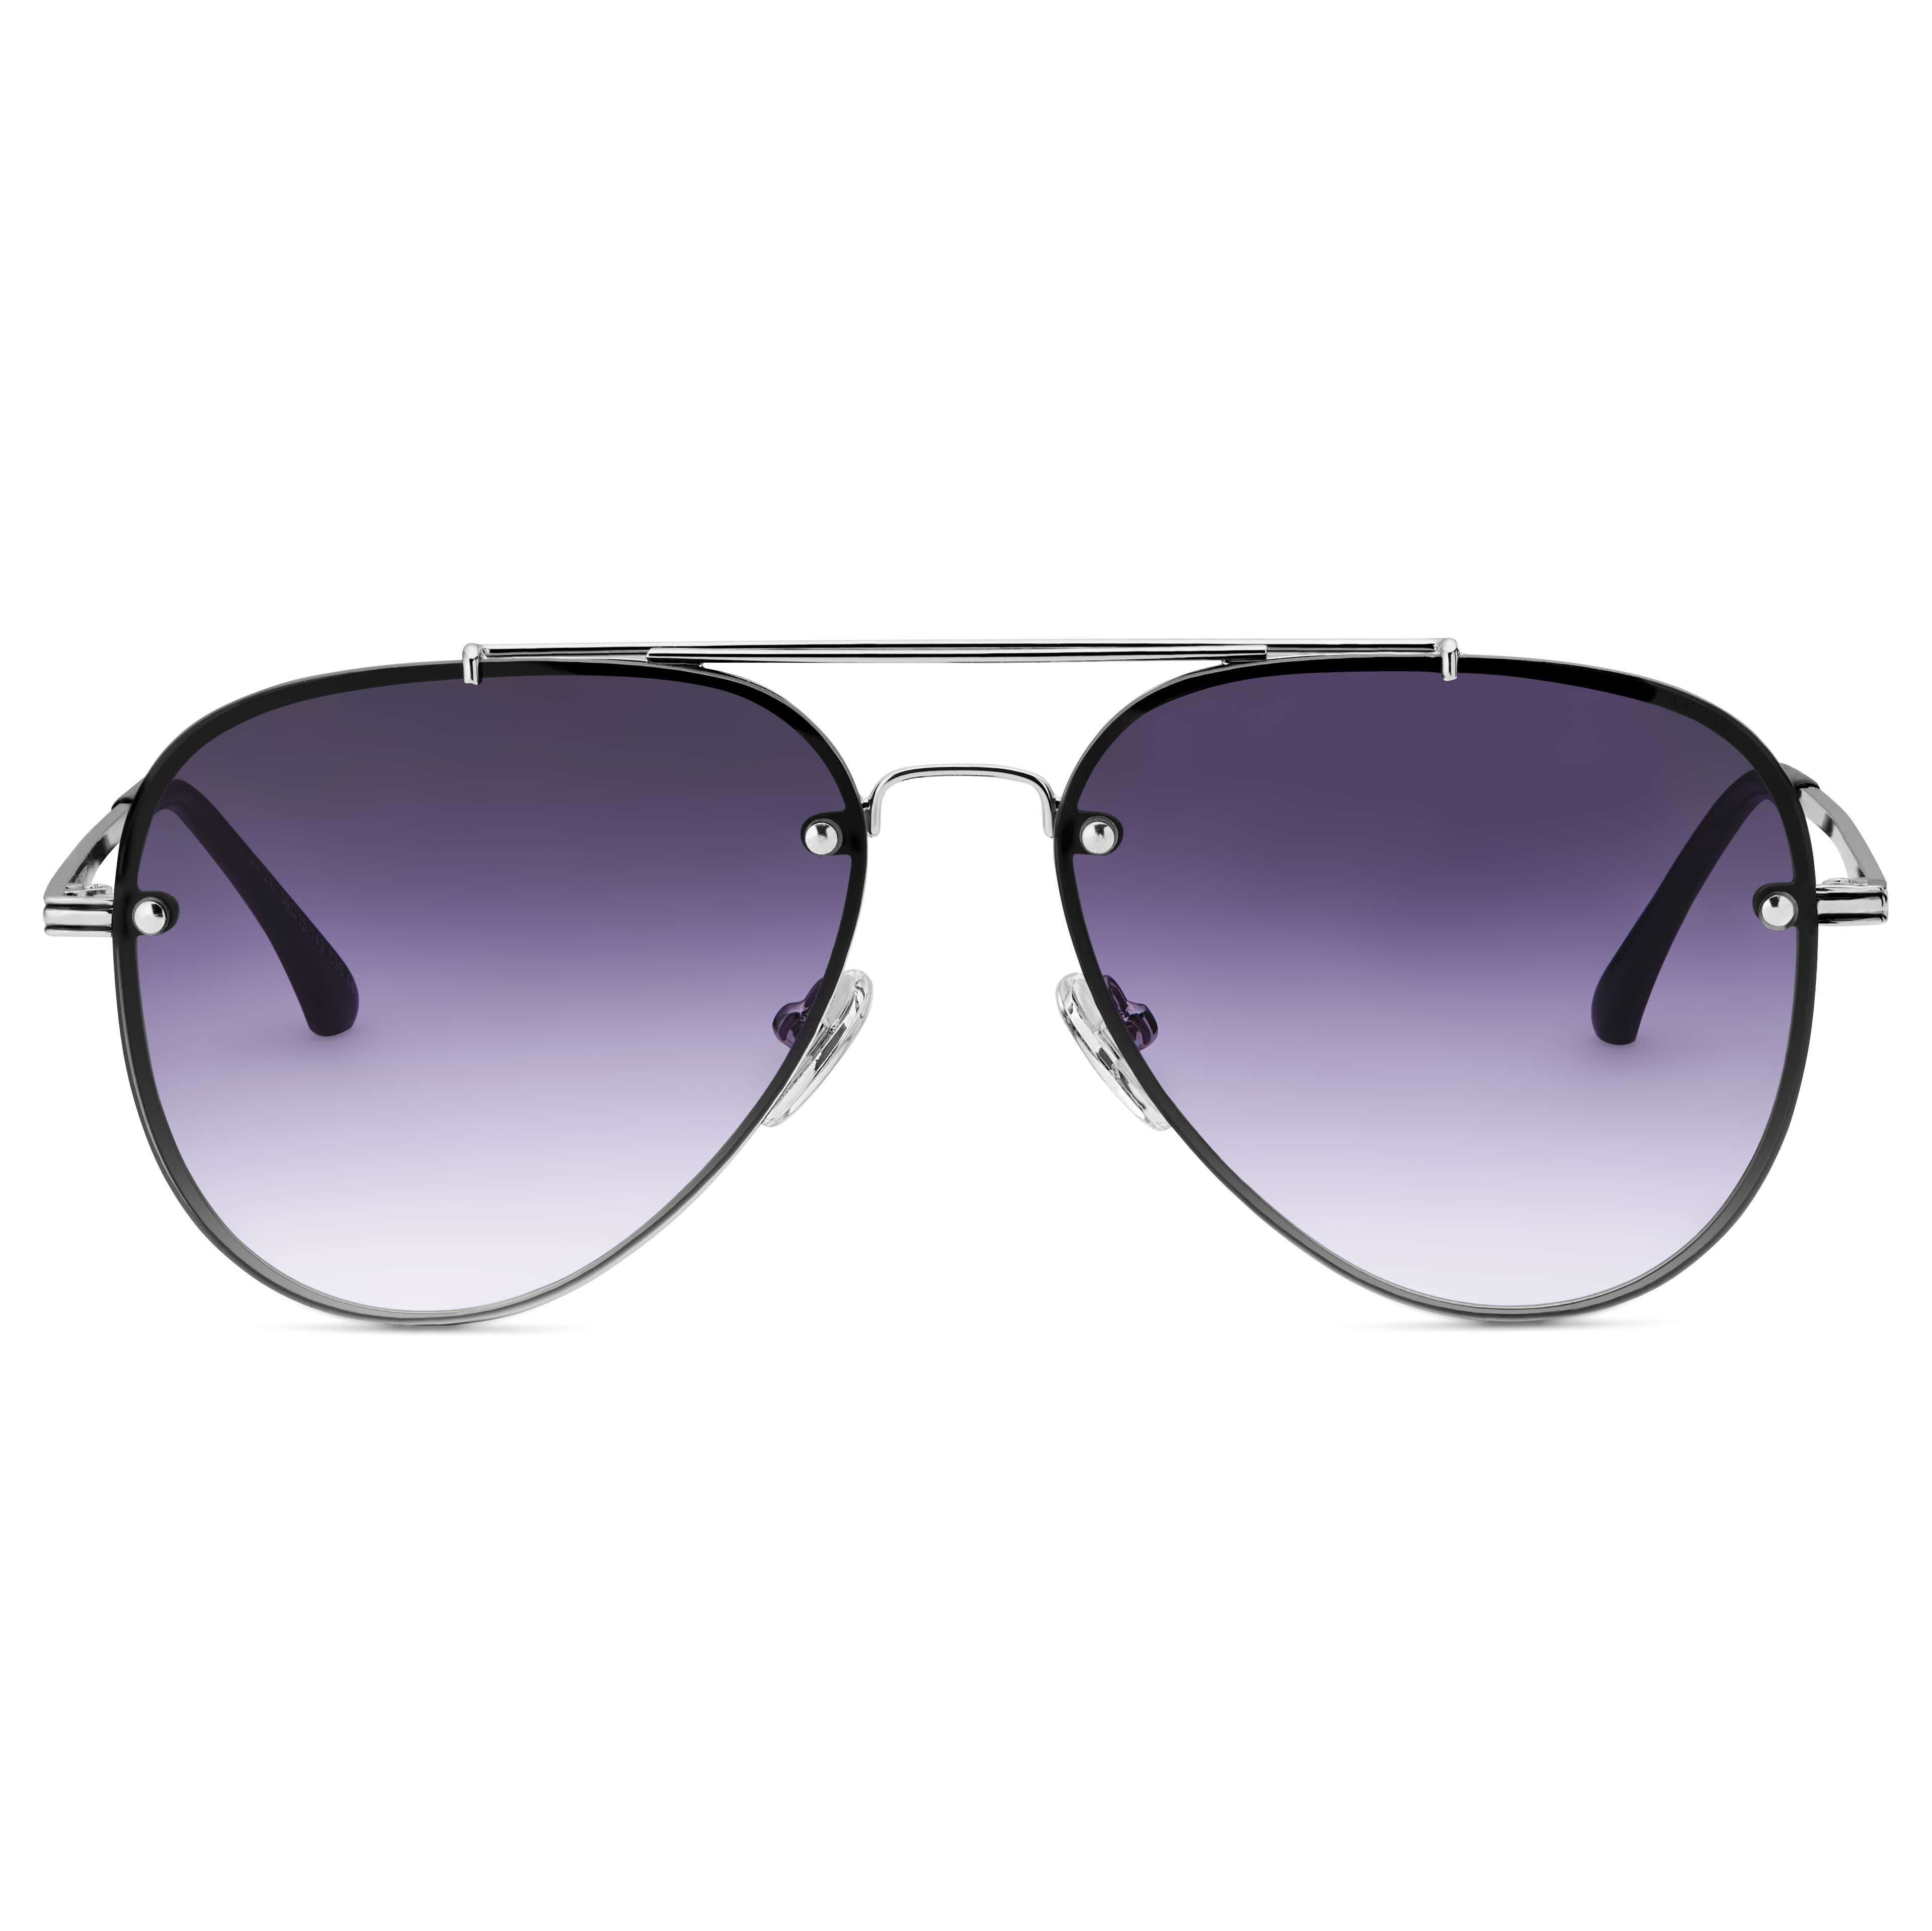 Silver-tone Smokey Black Gradient Aviator Sunglasses - 2 - hover gallery